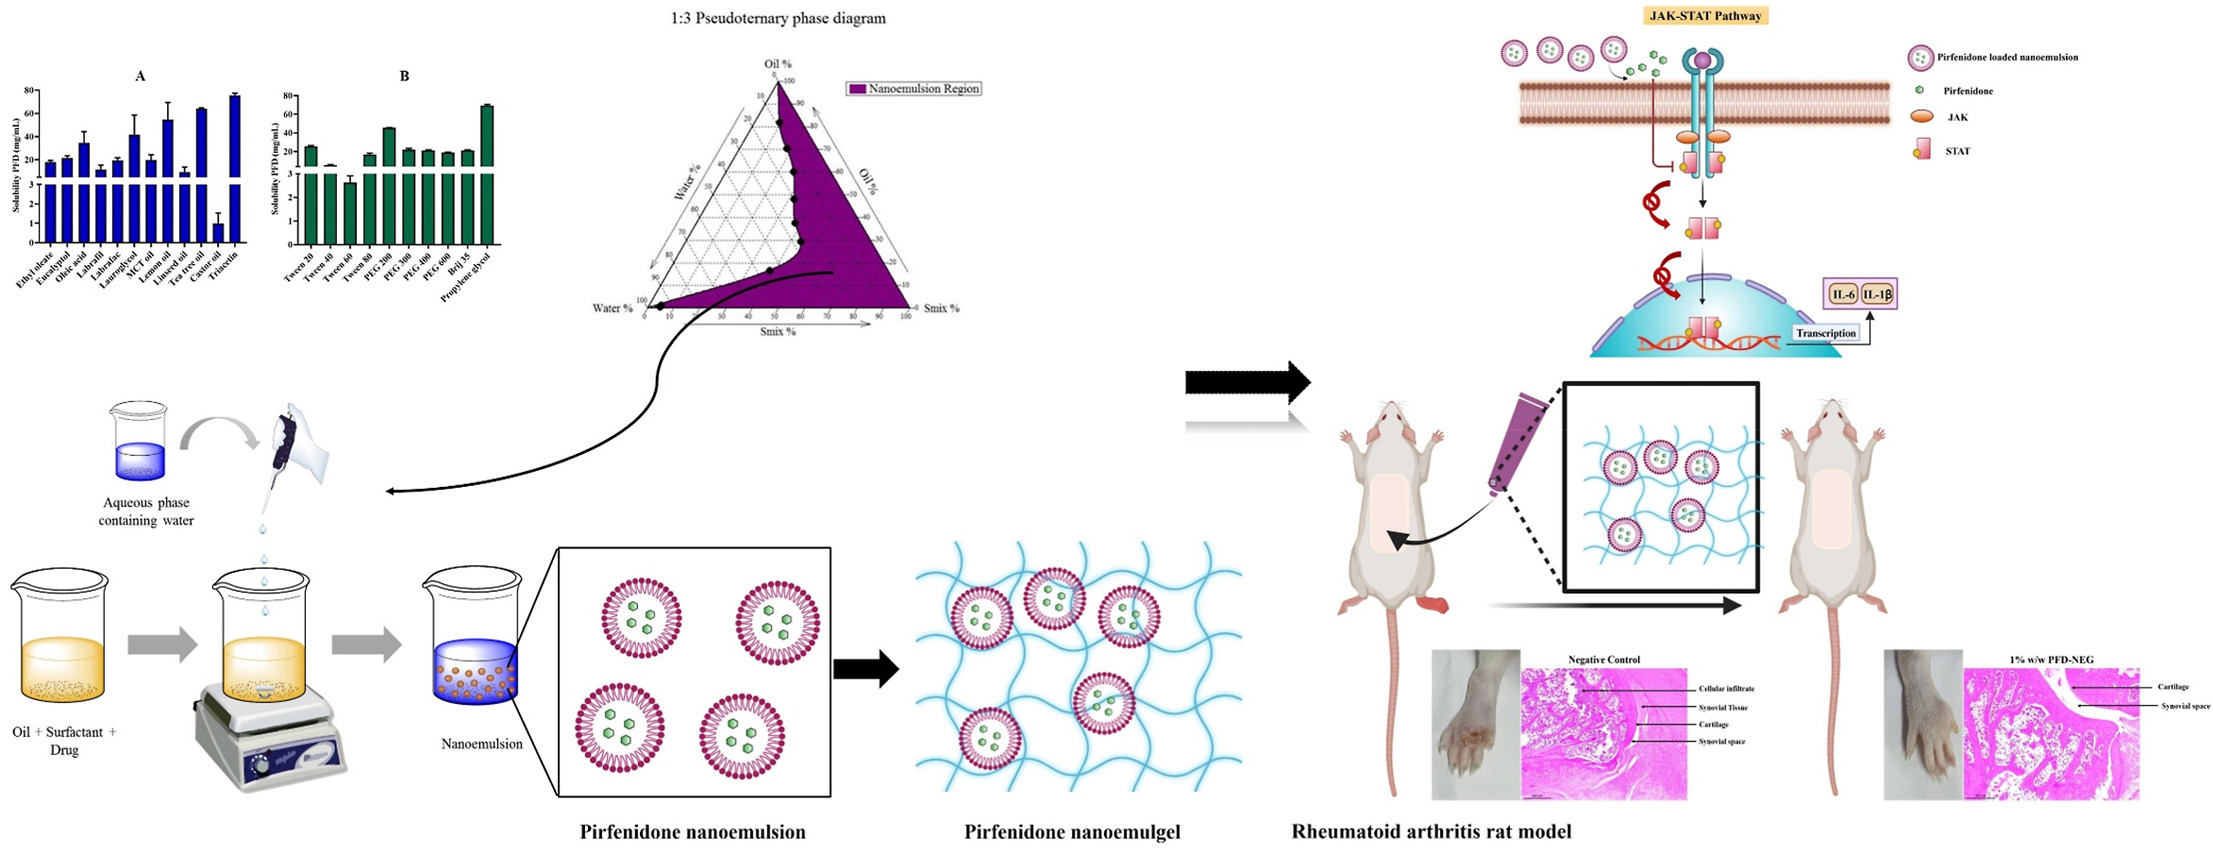 Transdermal delivery and exploration of preclinical anti-rheumatoid efficacy of pirfenidone embedded nanoemulgel in adjuvant-induced rat model